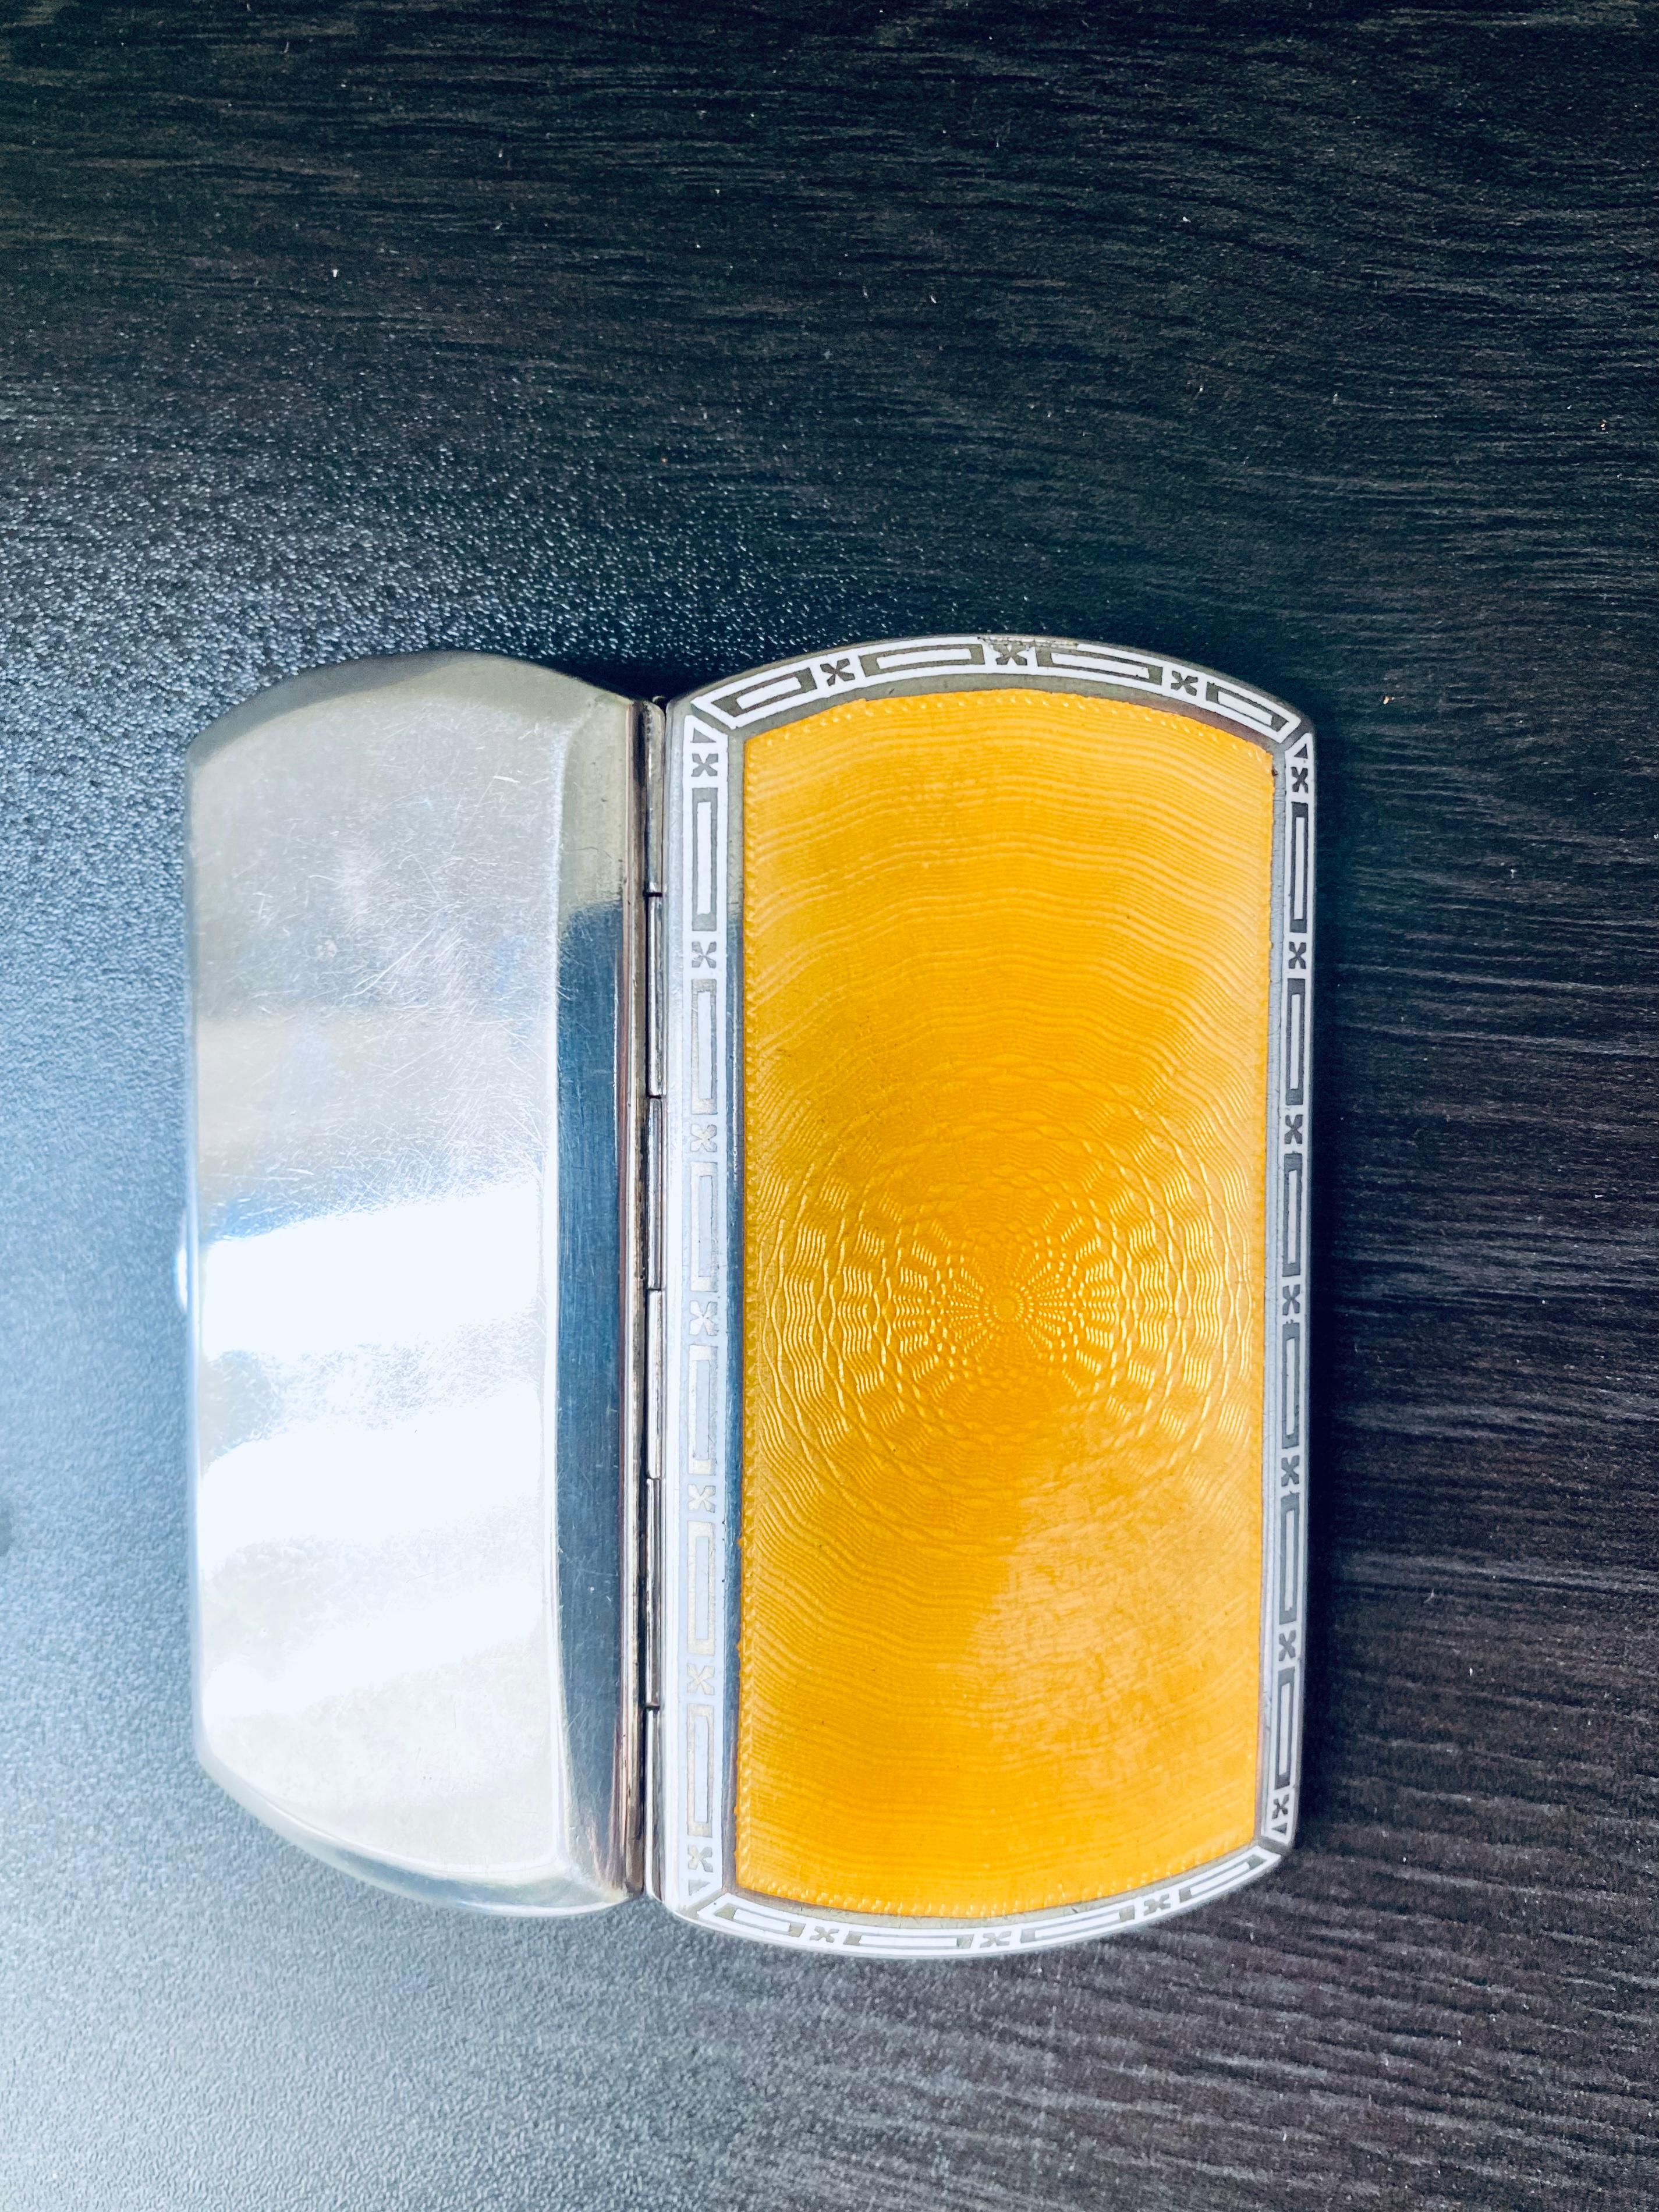 Vintage 1924 Silver Guilloche Translucent Yellow Enamel Cigarette Case 3.65 Inch For Sale 1